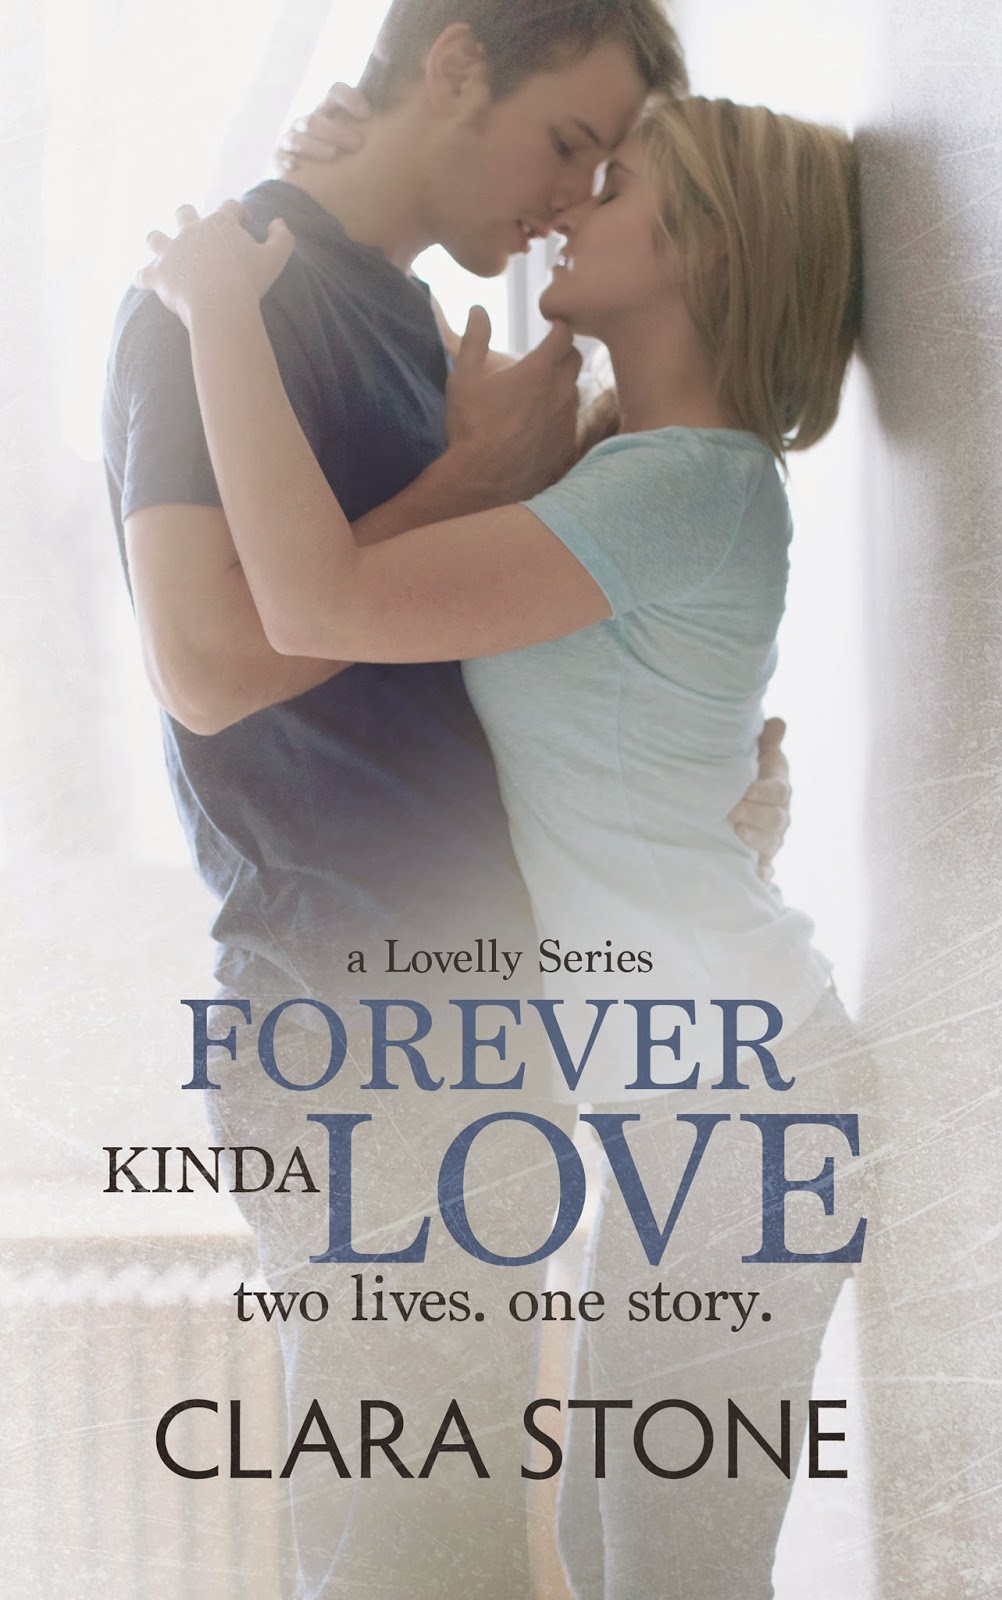 Love Forever? Книга. Kinda Love. Любовь живет вечно книга.